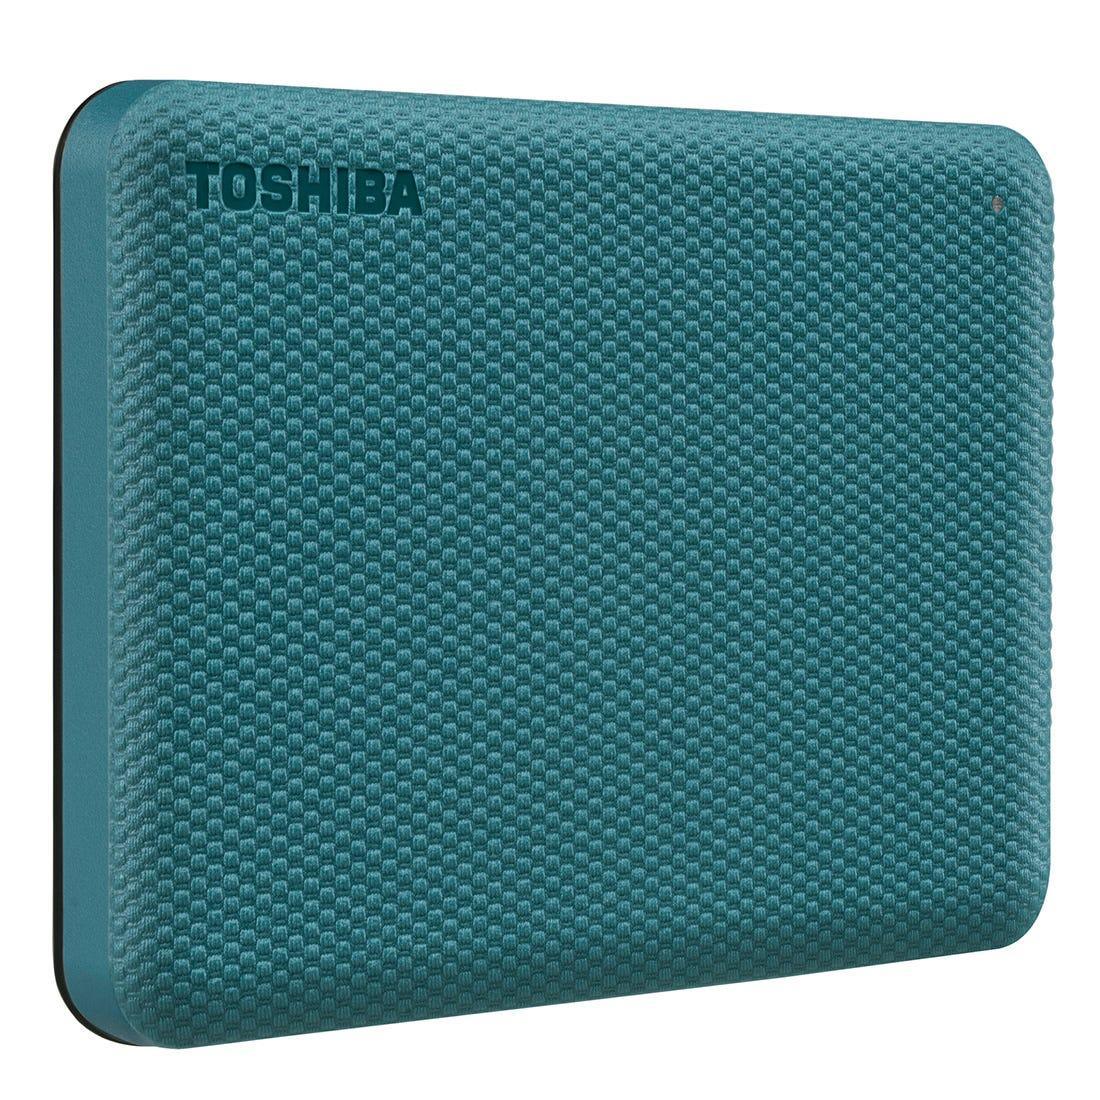 HD Externo Toshiba 1TB Canvio Advance Verde HDTCA10XG3AA I - Mega Market